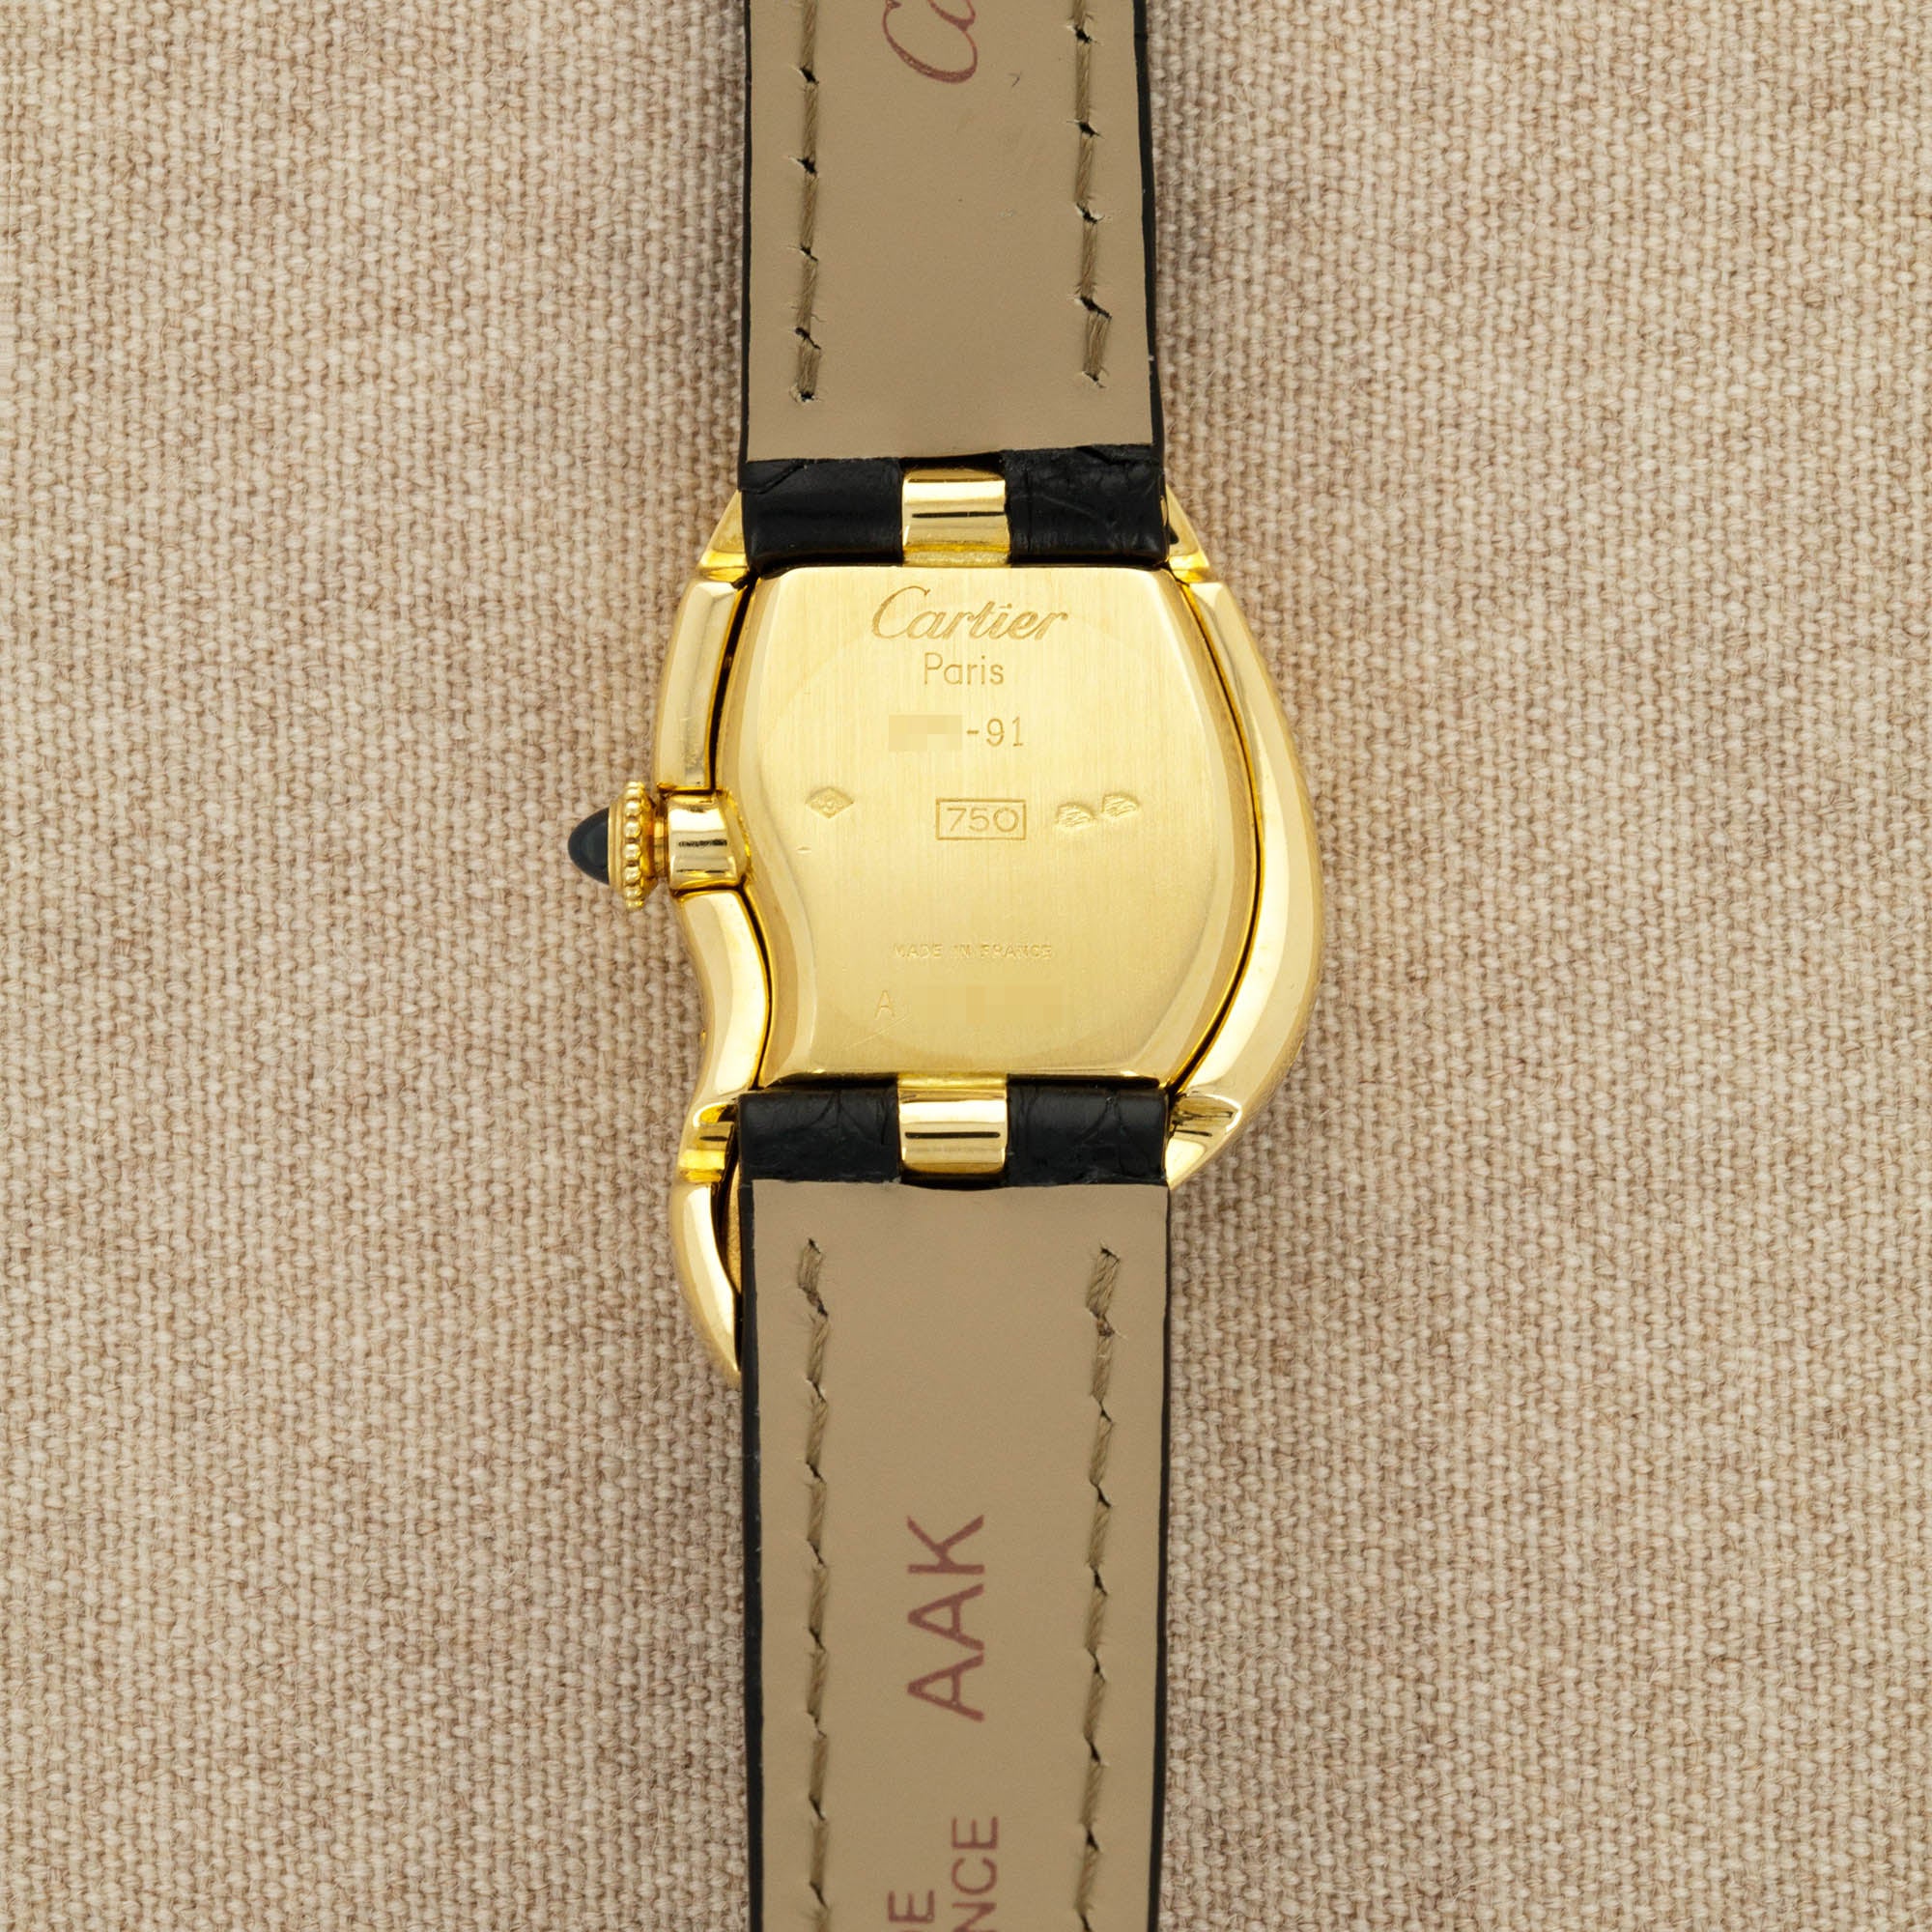 Cartier - Cartier Yellow Gold Paris Crash 1991 - The Keystone Watches